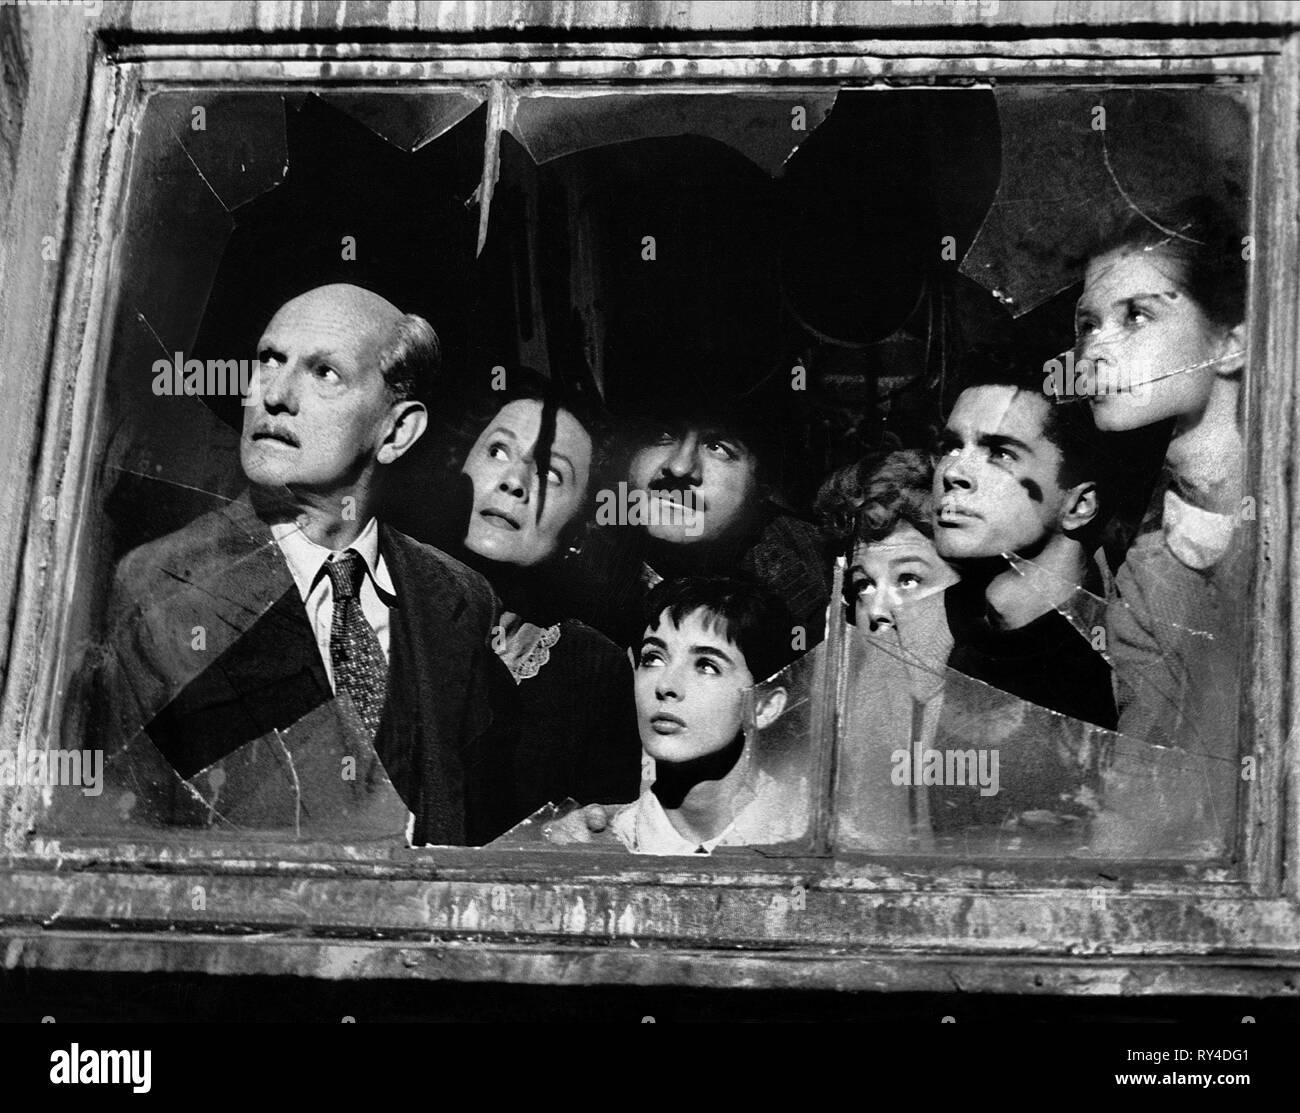 SCHILDKRAUT,HUBER,JACOBI,BAKER,PERKINS,WINTERS,BEYMER, THE DIARY OF ANNE FRANK, 1959 Stock Photo